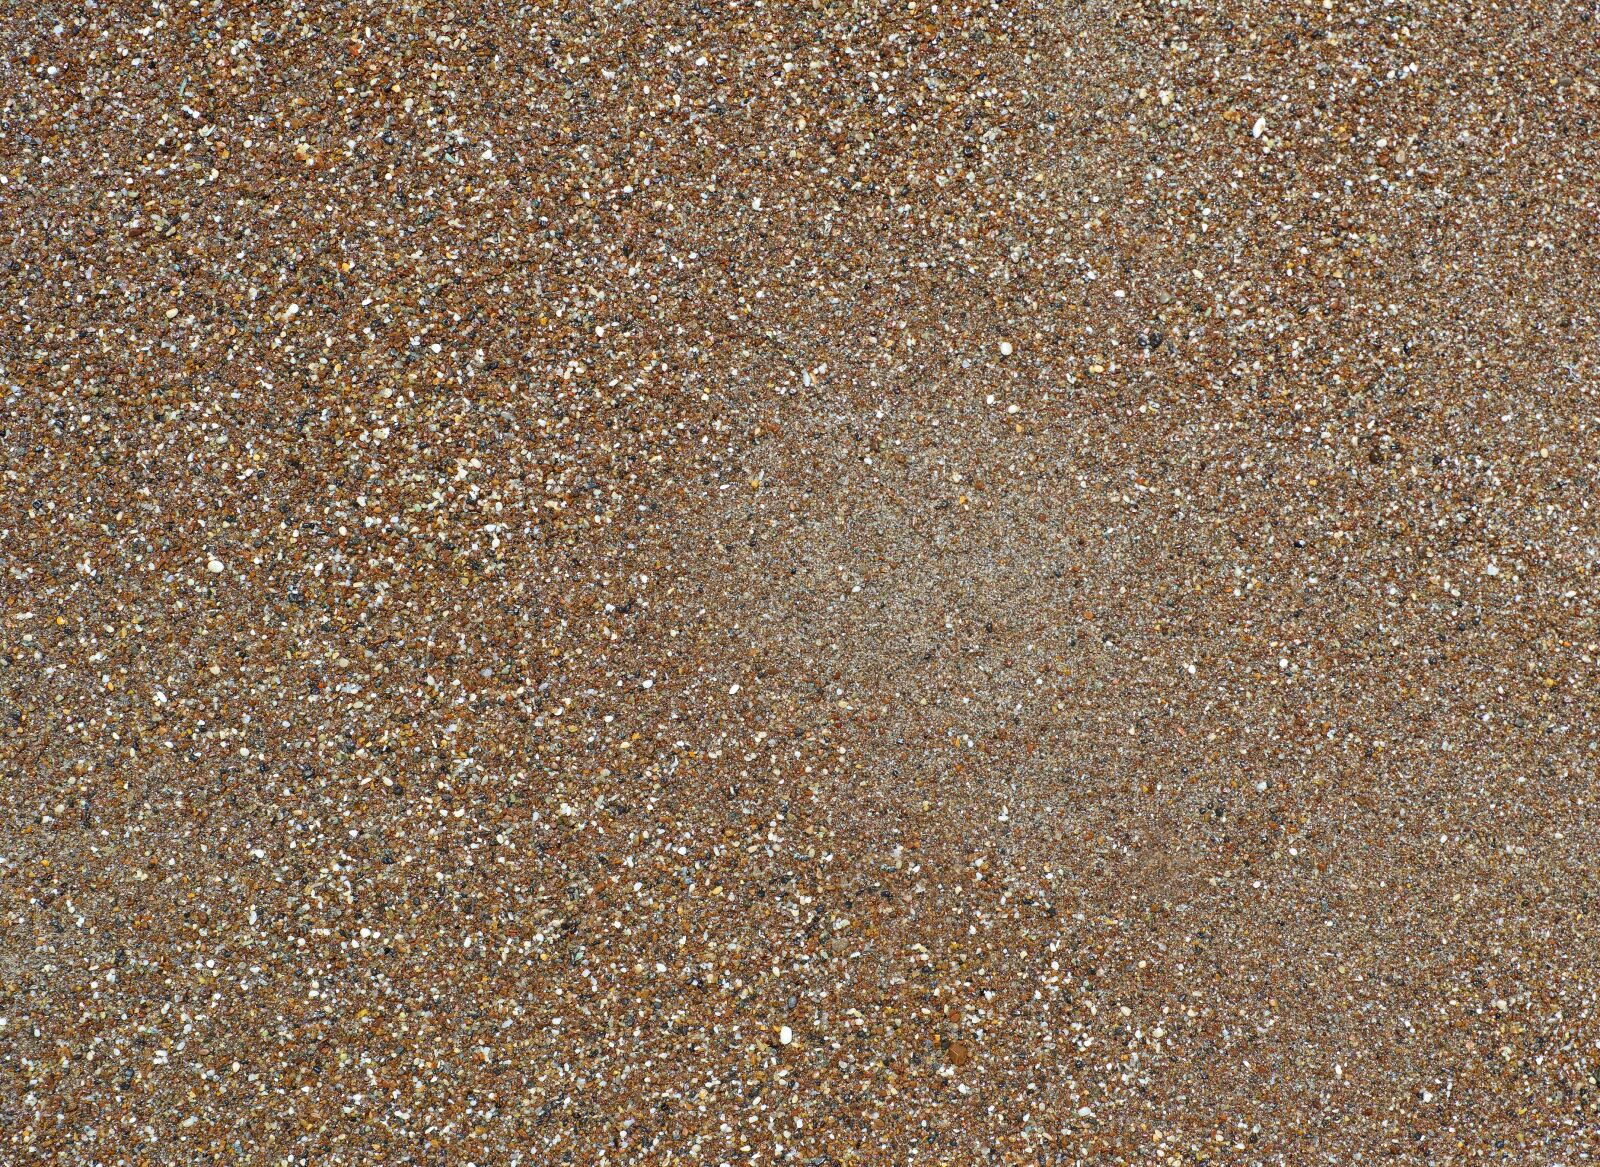 Sigma DP3 Merrill sample photo. Sand, beach, texture photography